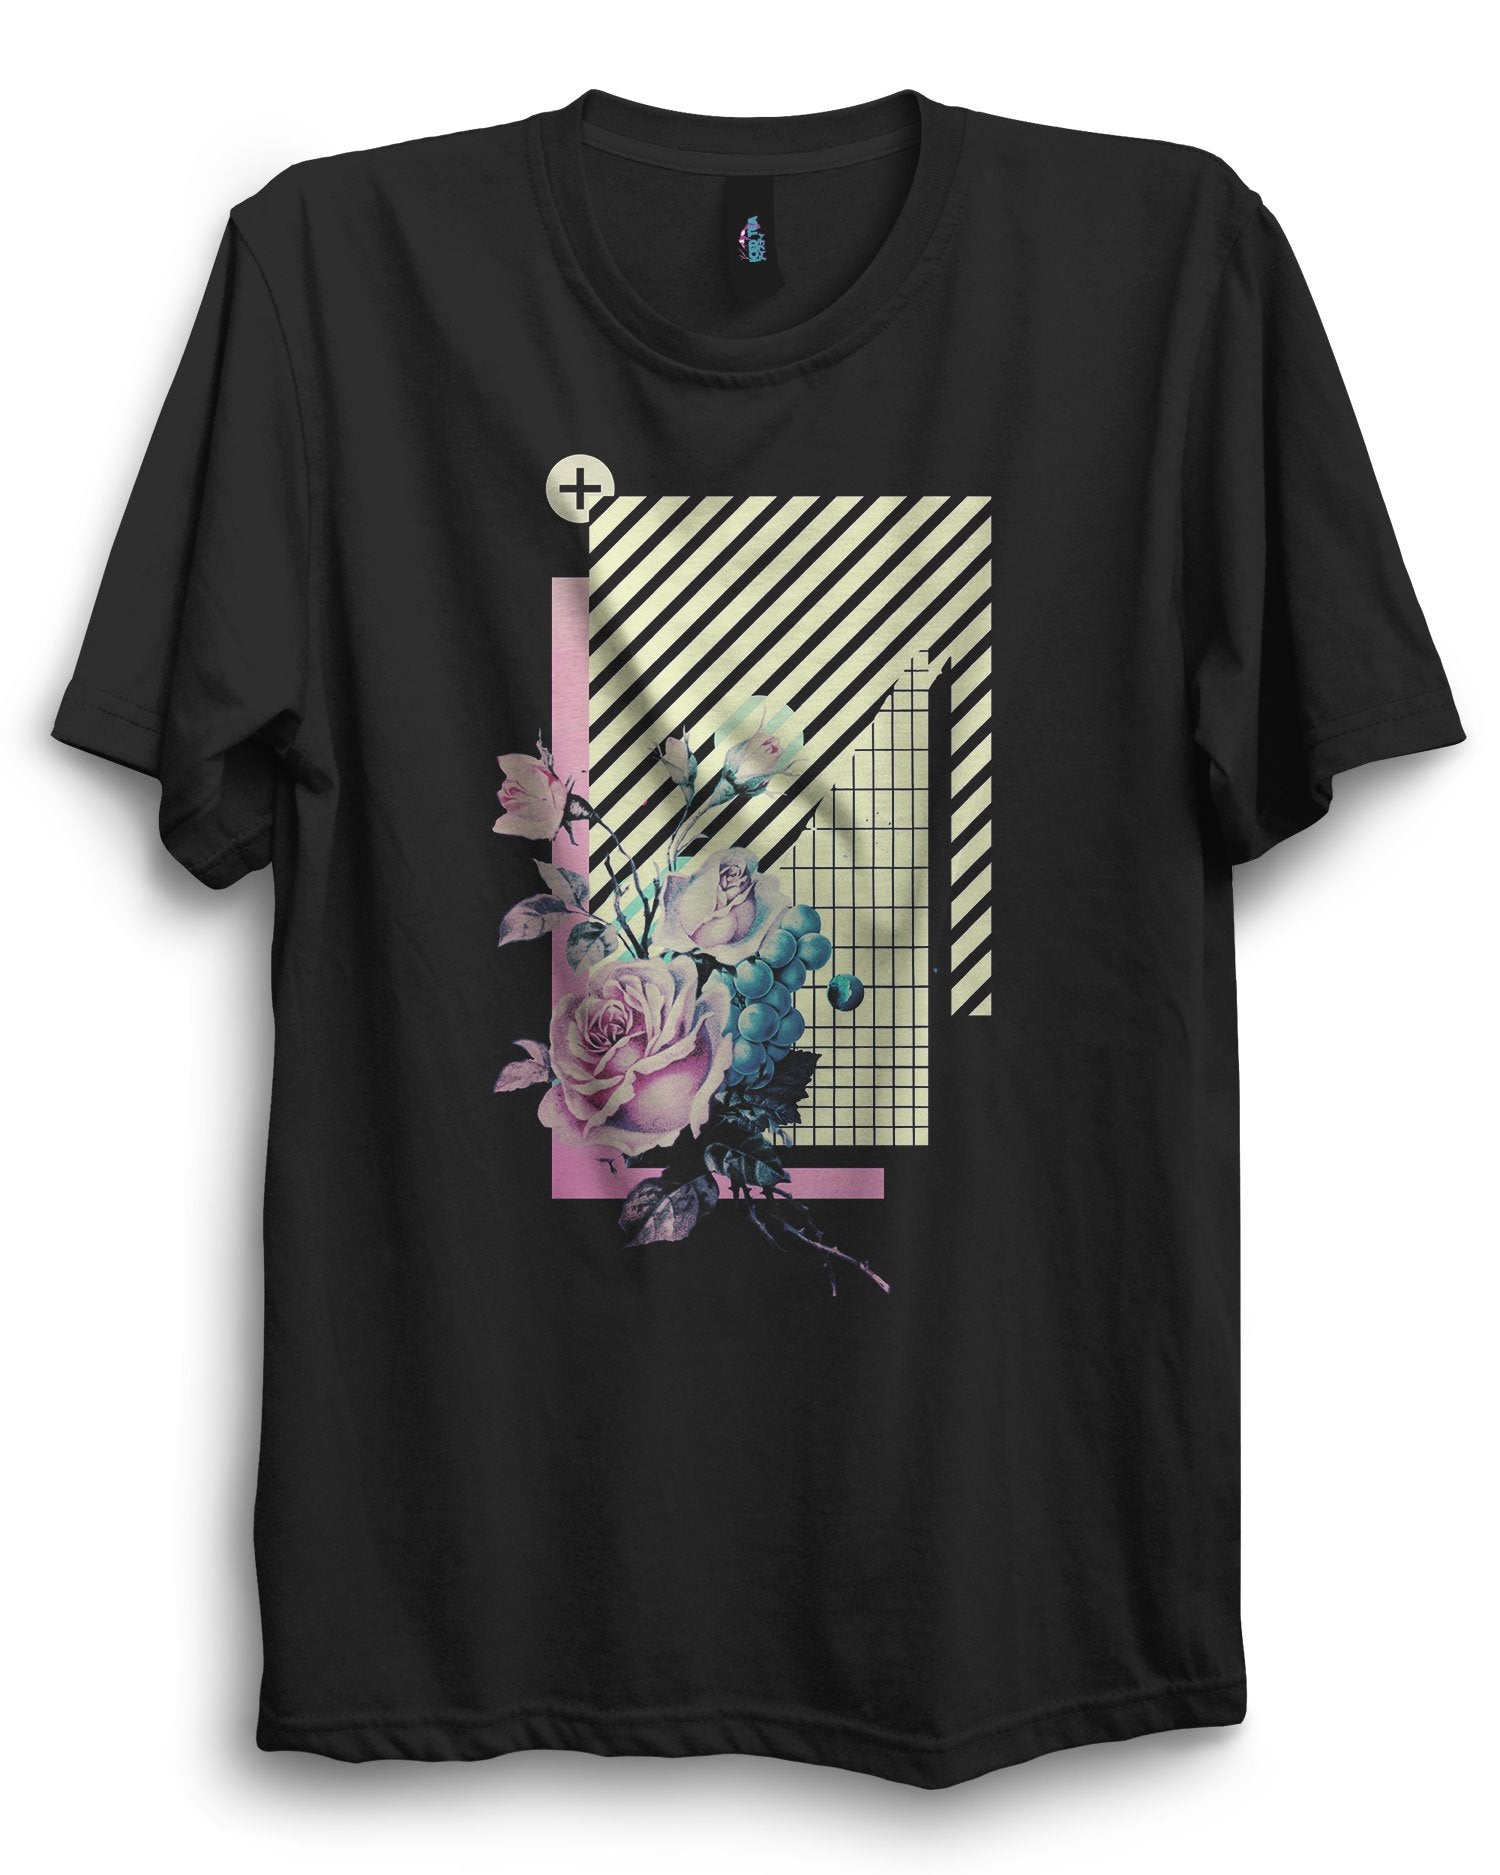 REPLICA - Aesthetic T-Shirt - Dark Aesthetics and Anime Clothing Streetwear